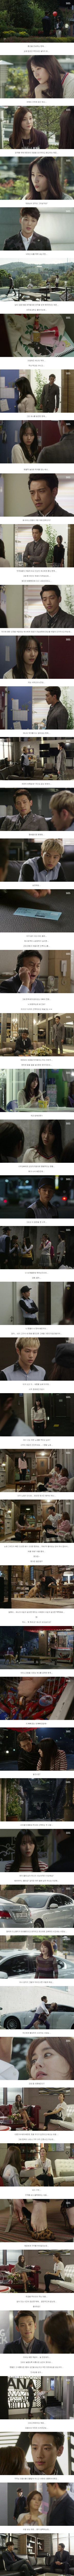 episode 4 captures for the Korean drama 'My Lovely Girl'